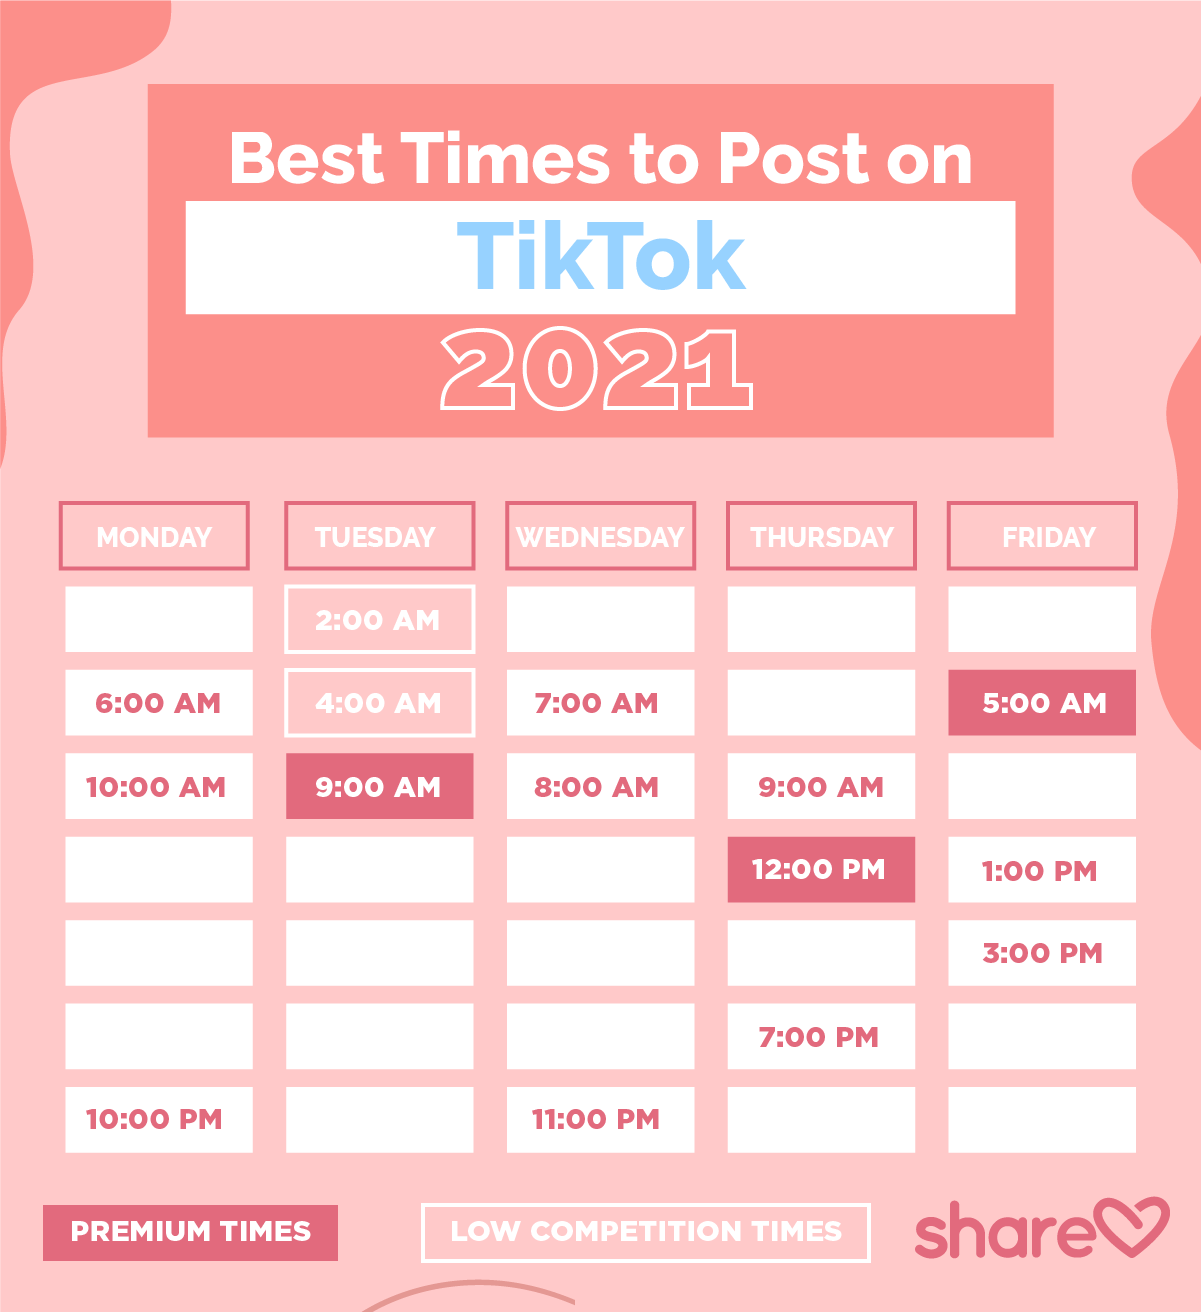 Best Times to Post on Tiktok 2021